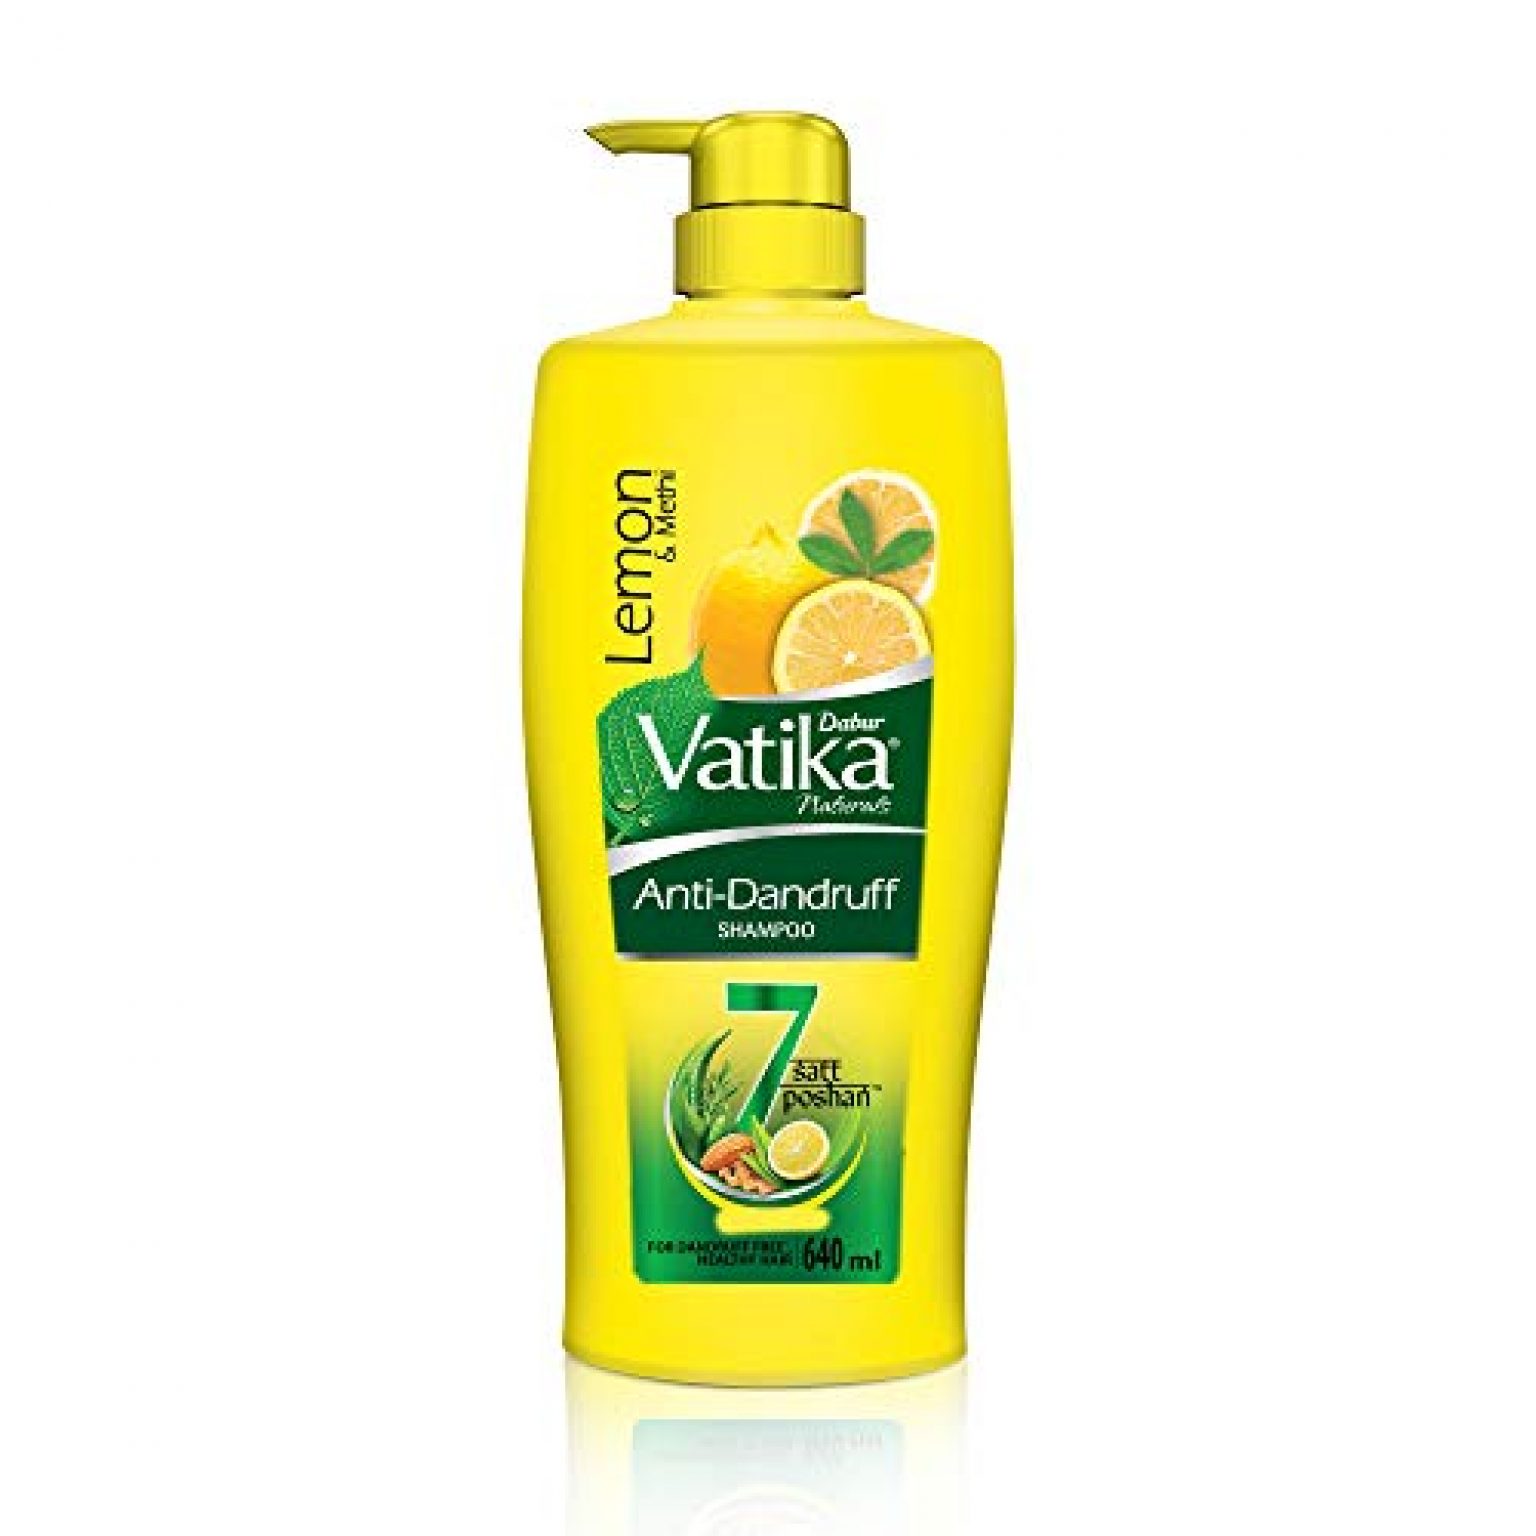 Dabur Vatika Anti Dandruff Shampoo, with Lemon & Methi for Dandruff Free Hair – 640ml